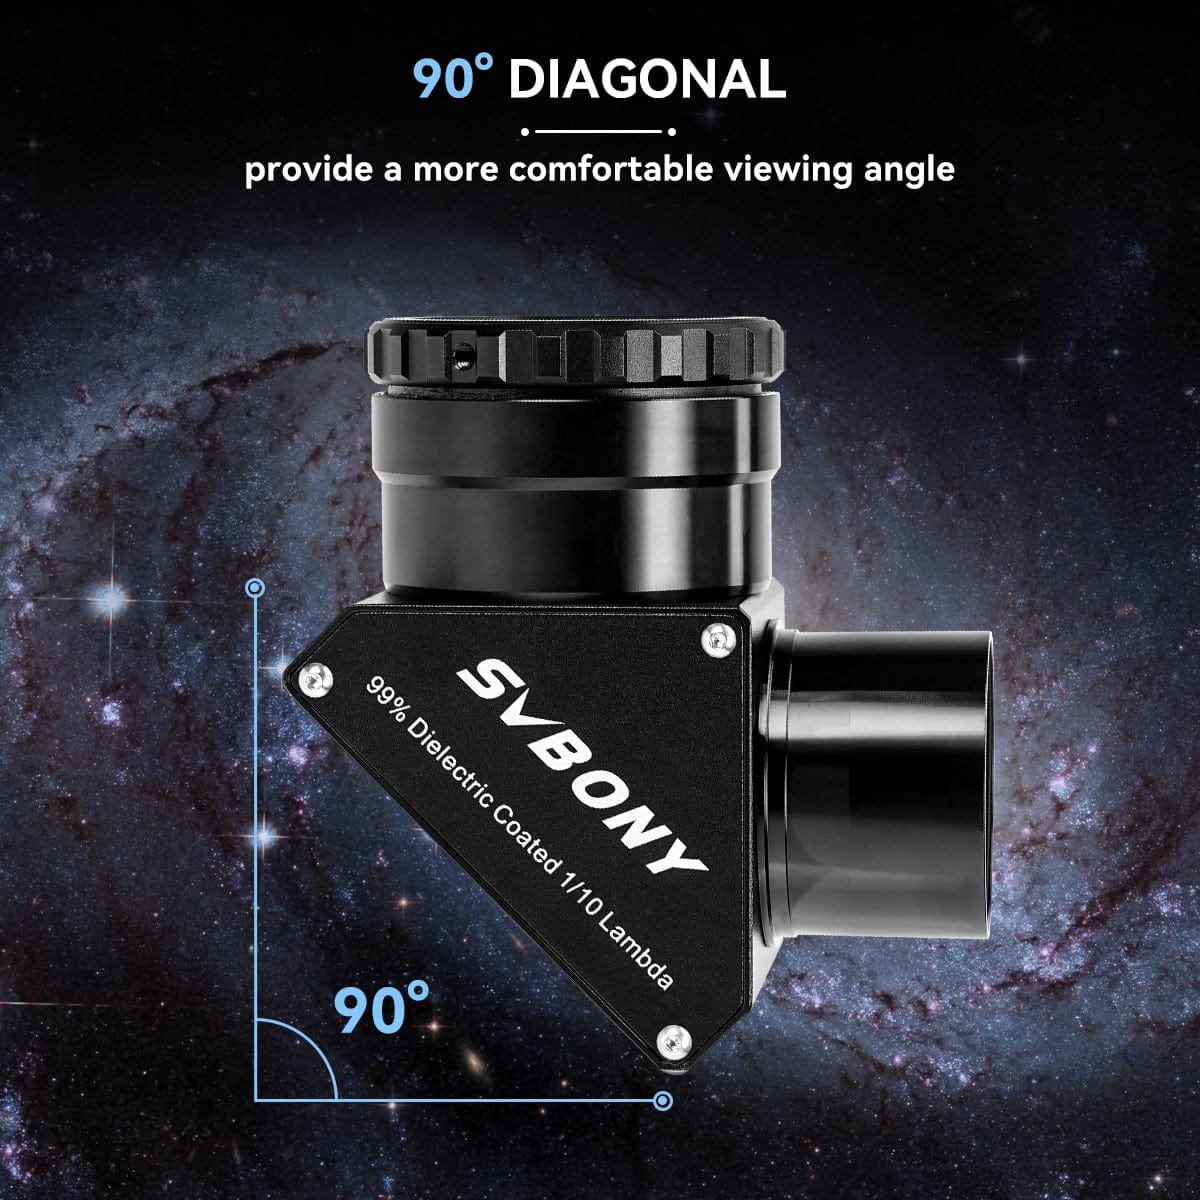 Svbony Accessory SV223 Diagonal 90-degree 2 inch Clicklock 99% Reflective Dielectric Coating - W9180B